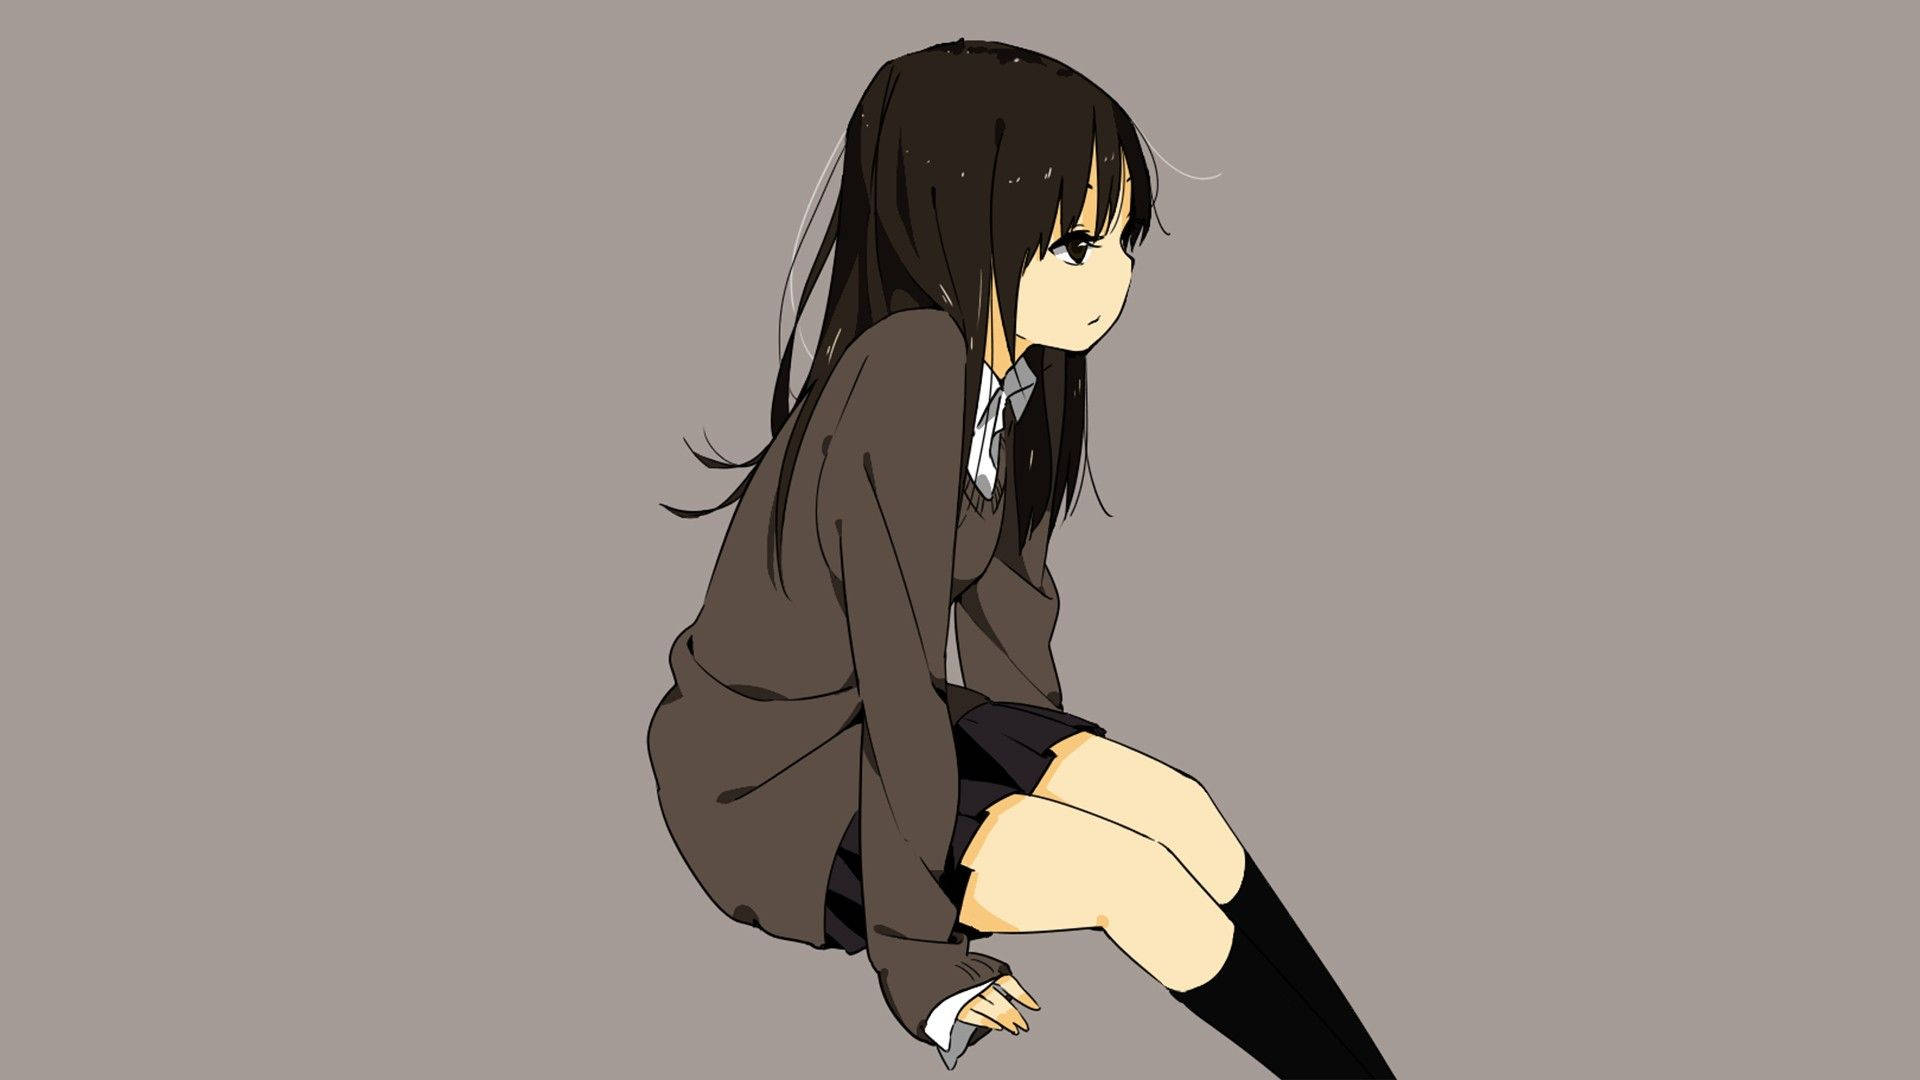 Sad Anime Girl In Grey Aesthetic Wallpaper